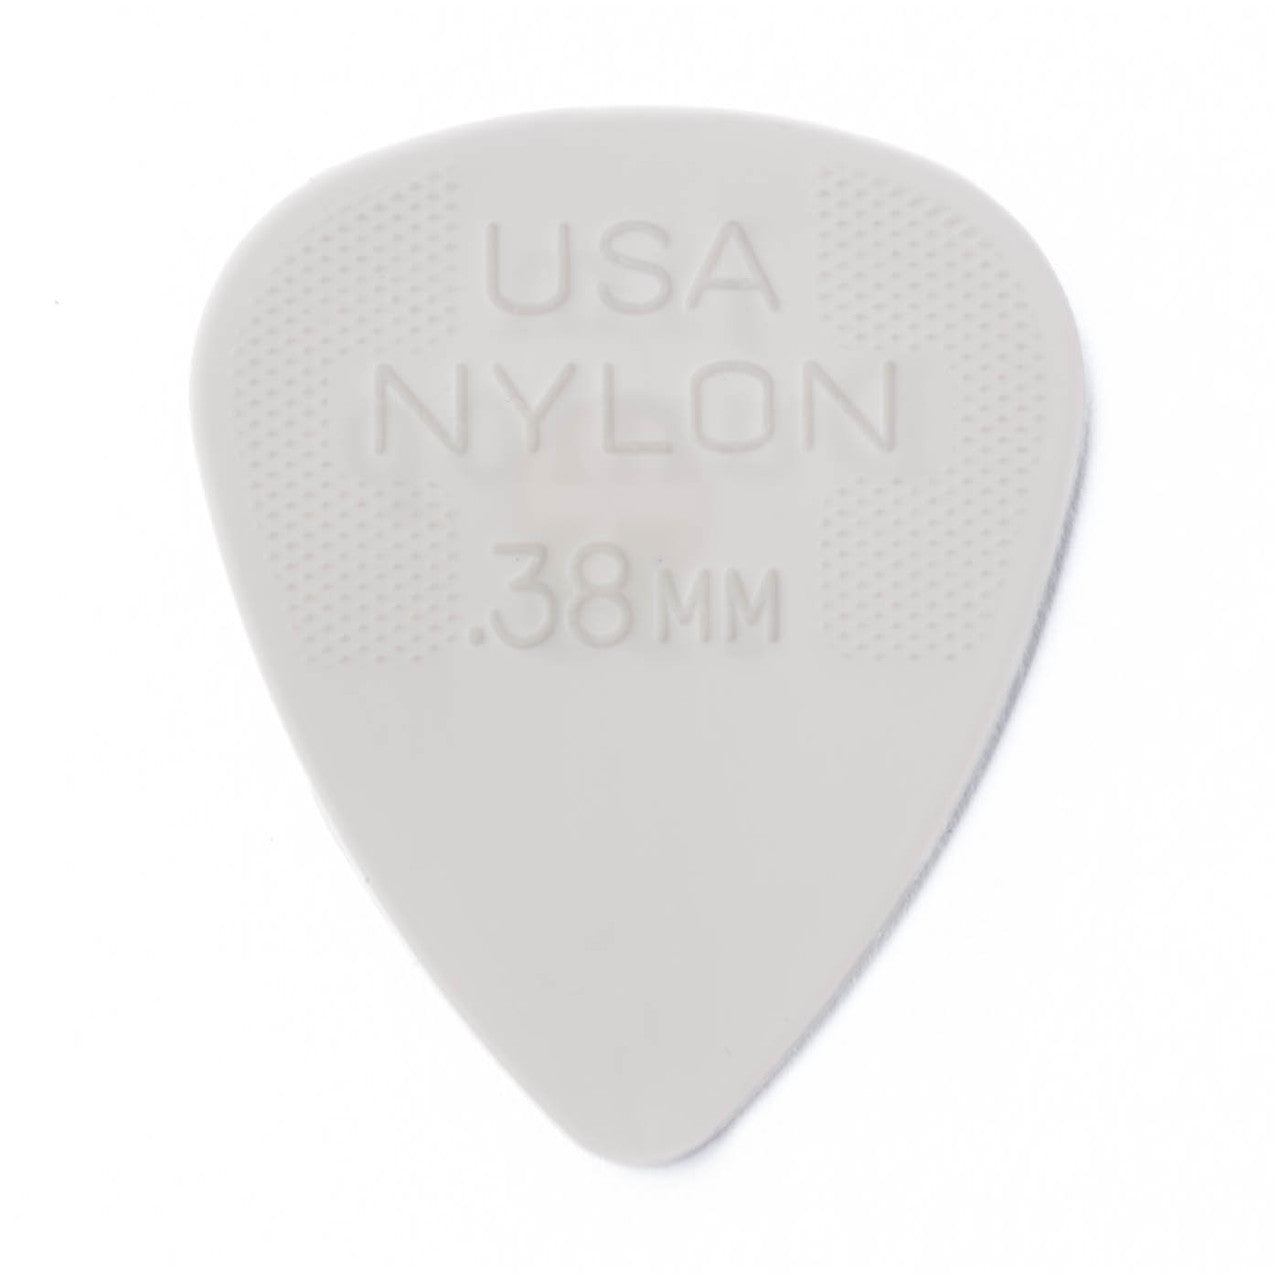 Dunlop Nylon "Greys" Guitar Picks